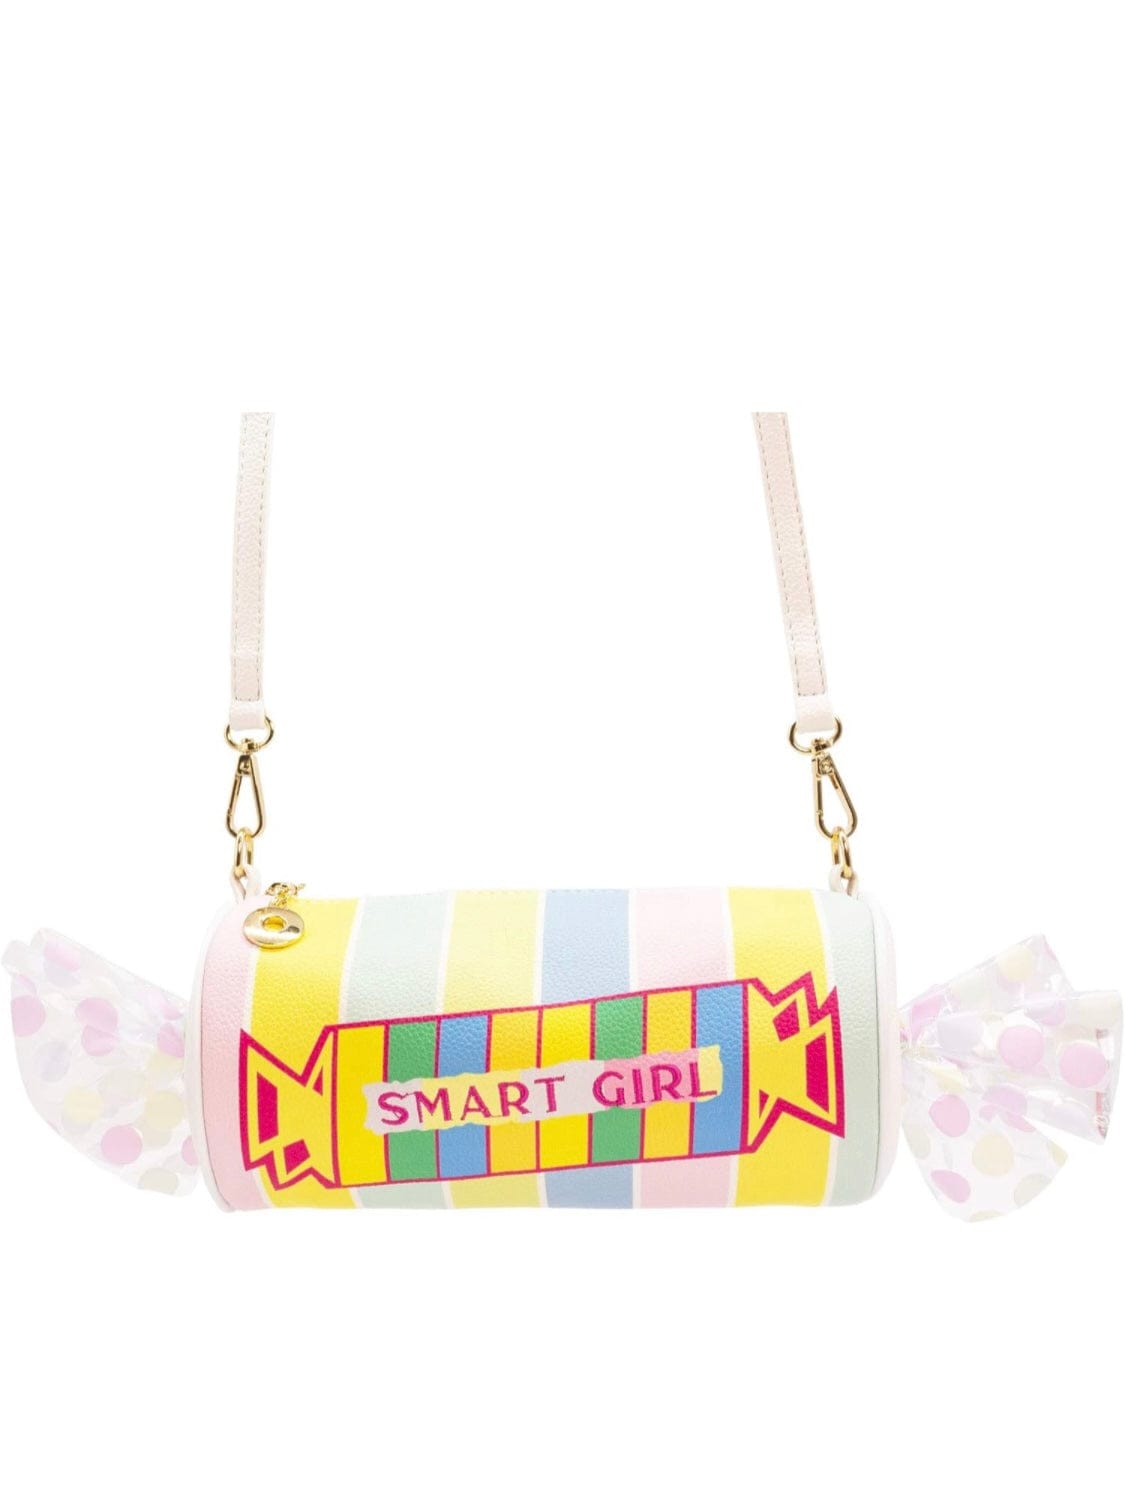 Fashionably, BBK! Handbags Smart Girl Candy Handbag